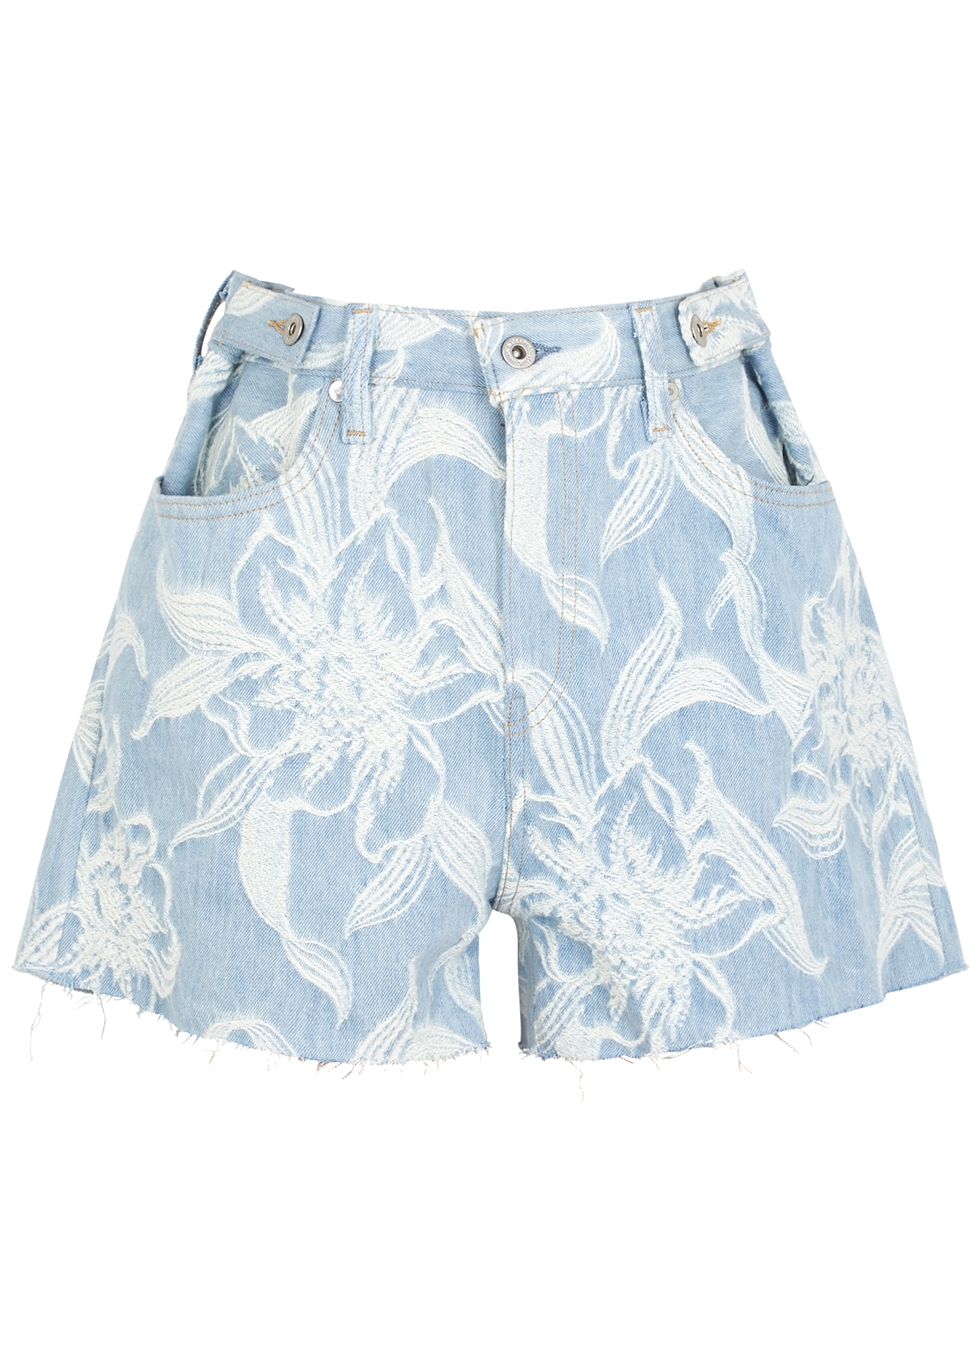 Levi's Light blue floral-jacquard denim shorts - Harvey Nichols